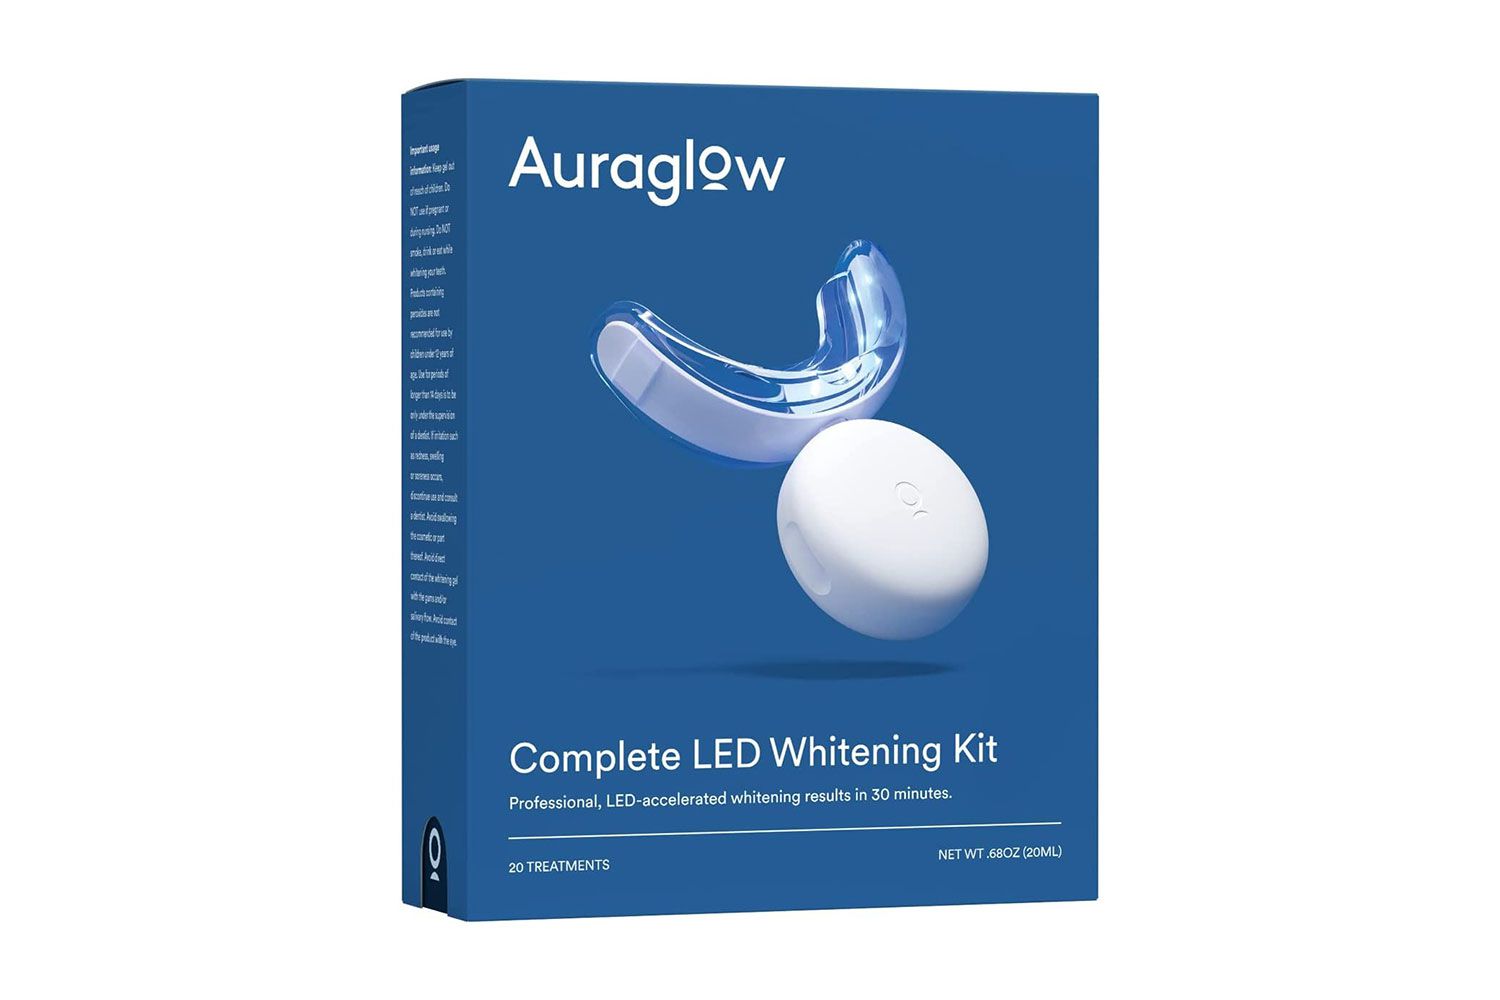 Auraglow Complete LED Whitening Kit